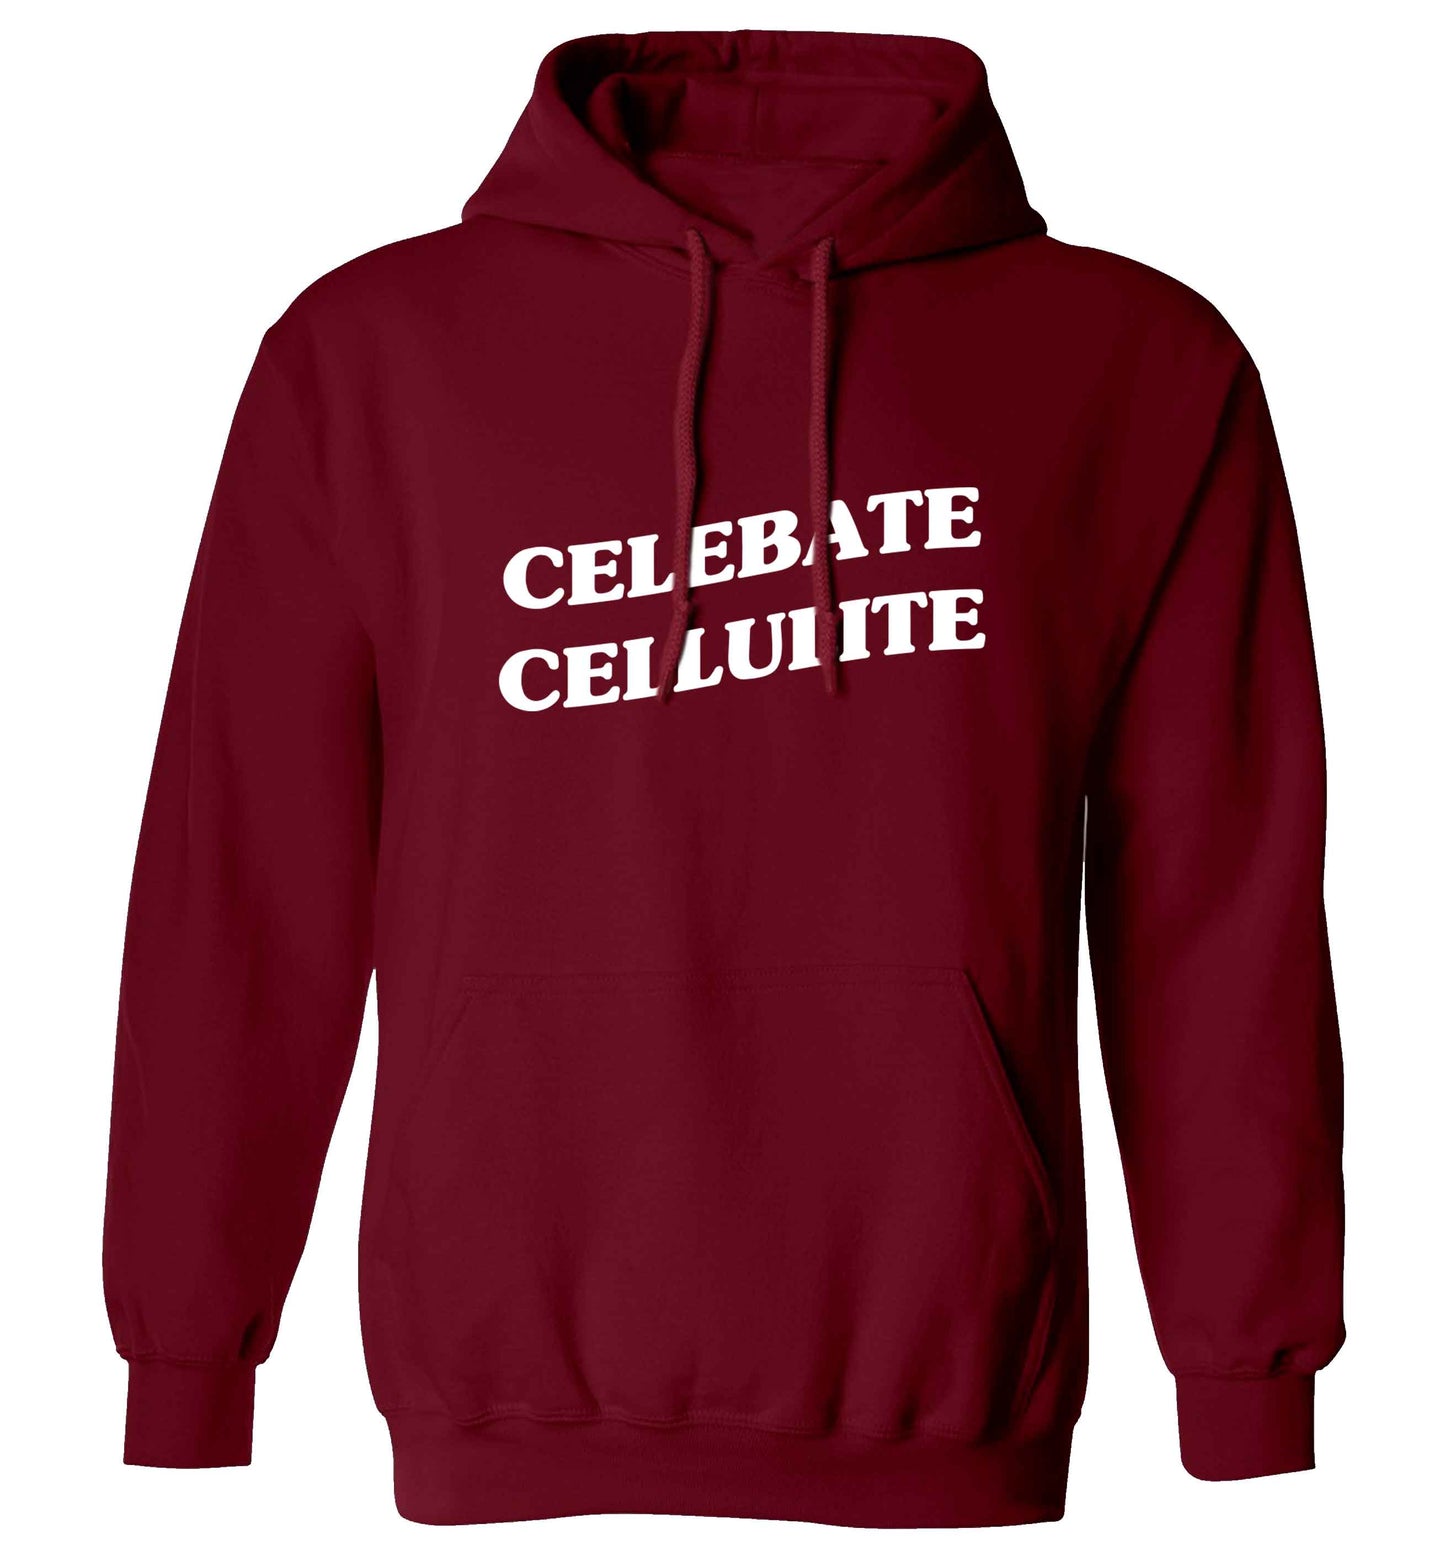 Celebrate cellulite adults unisex maroon hoodie 2XL